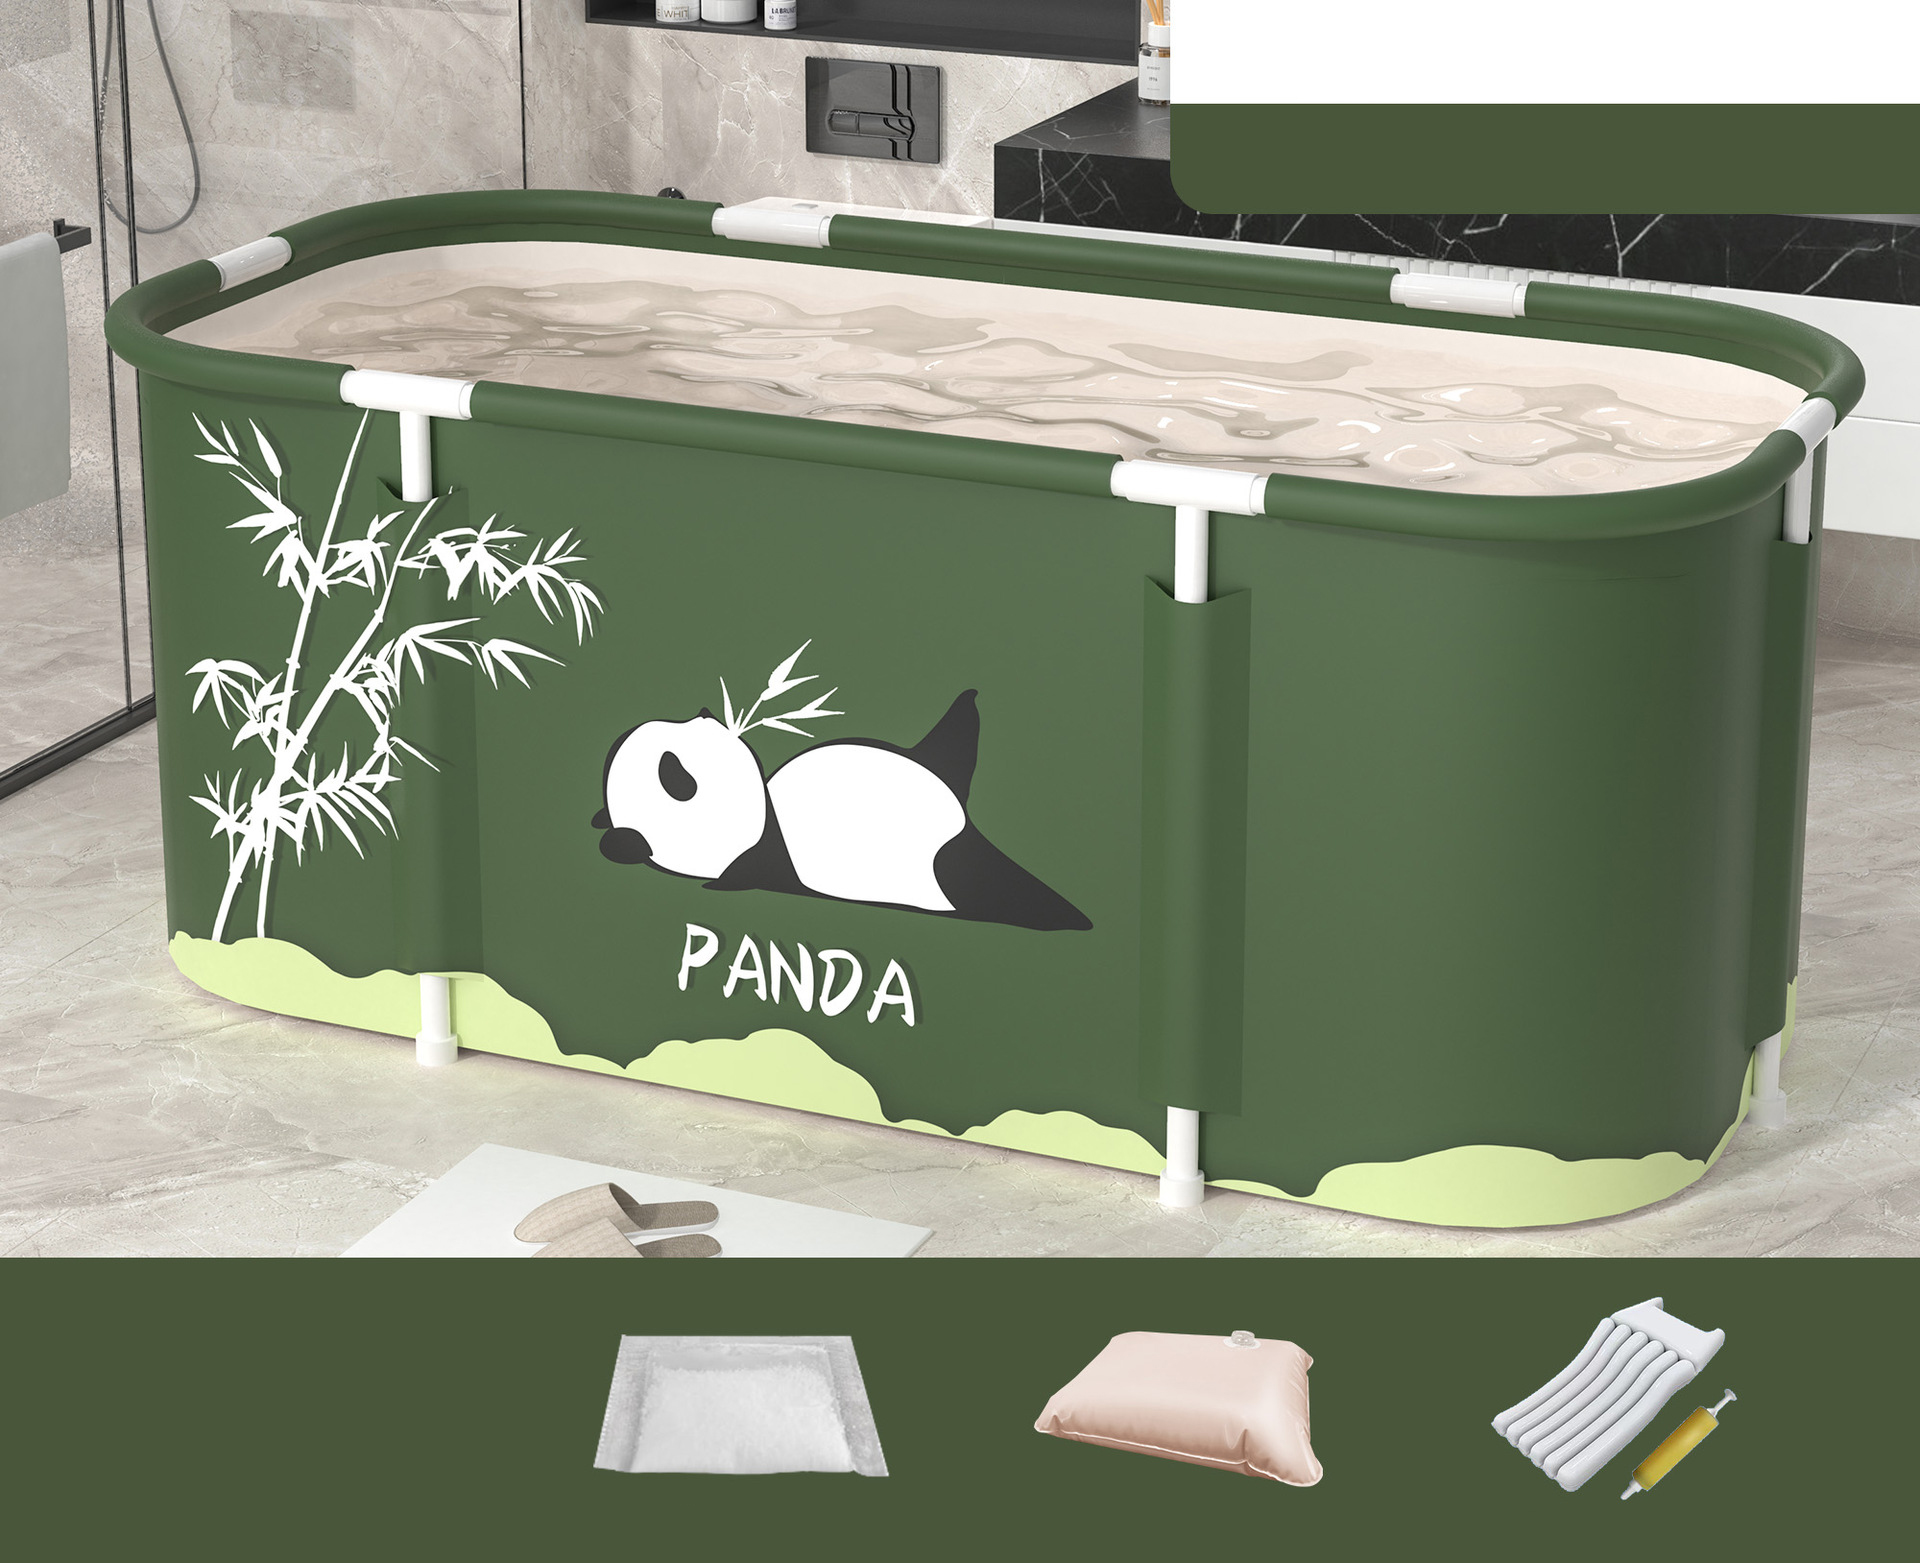 Panda  Set 1: Standard cushion Pump